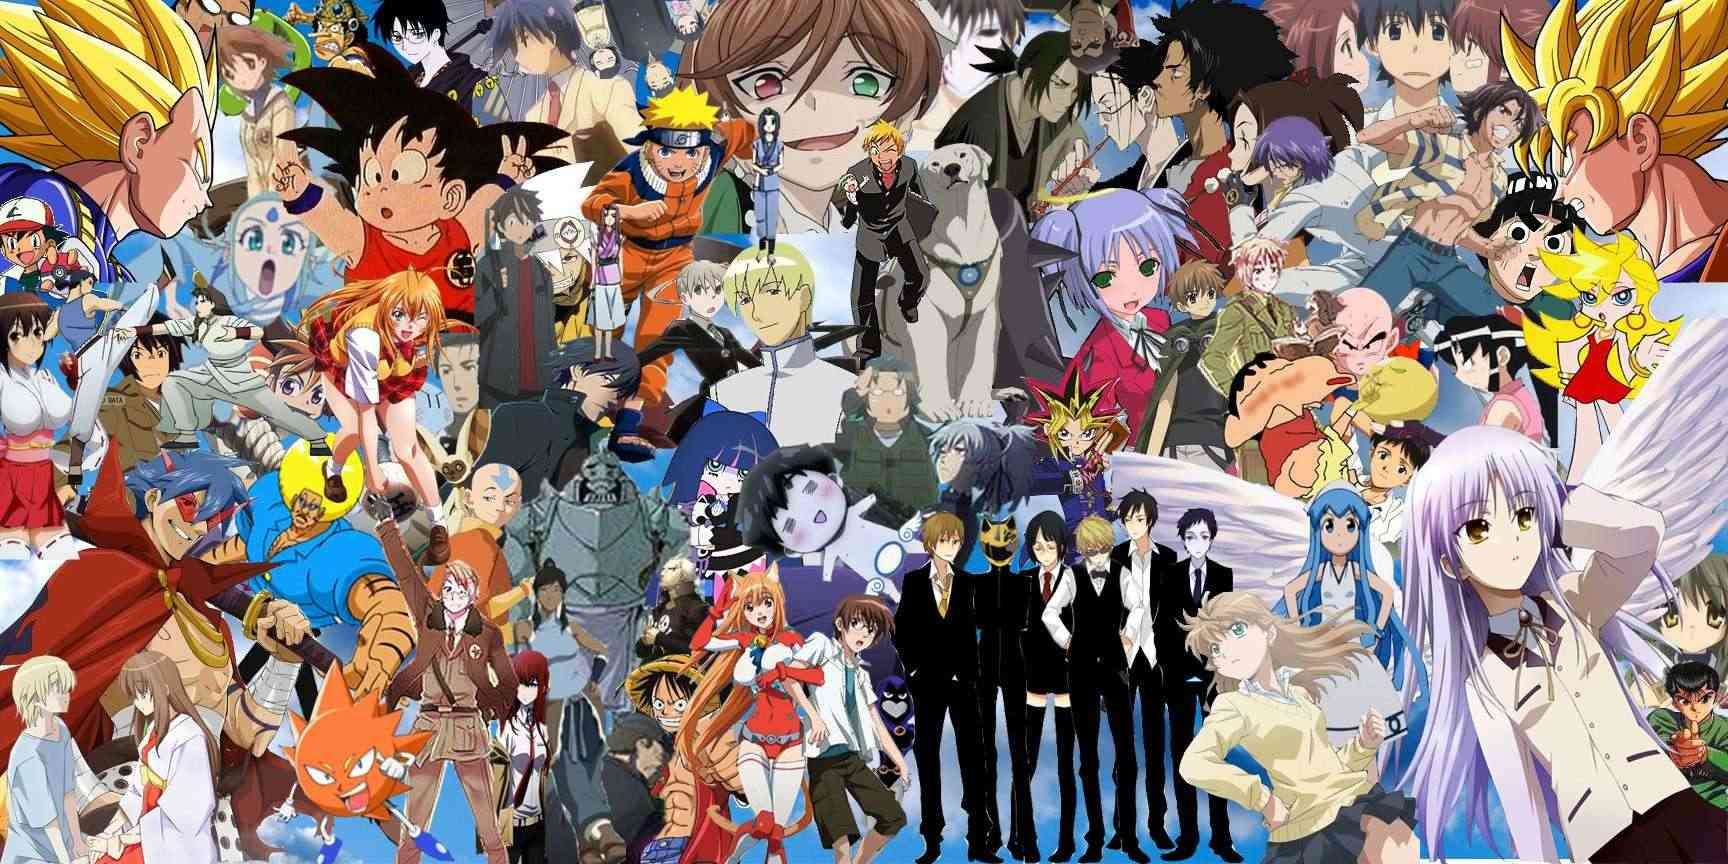 My Anime Experiences